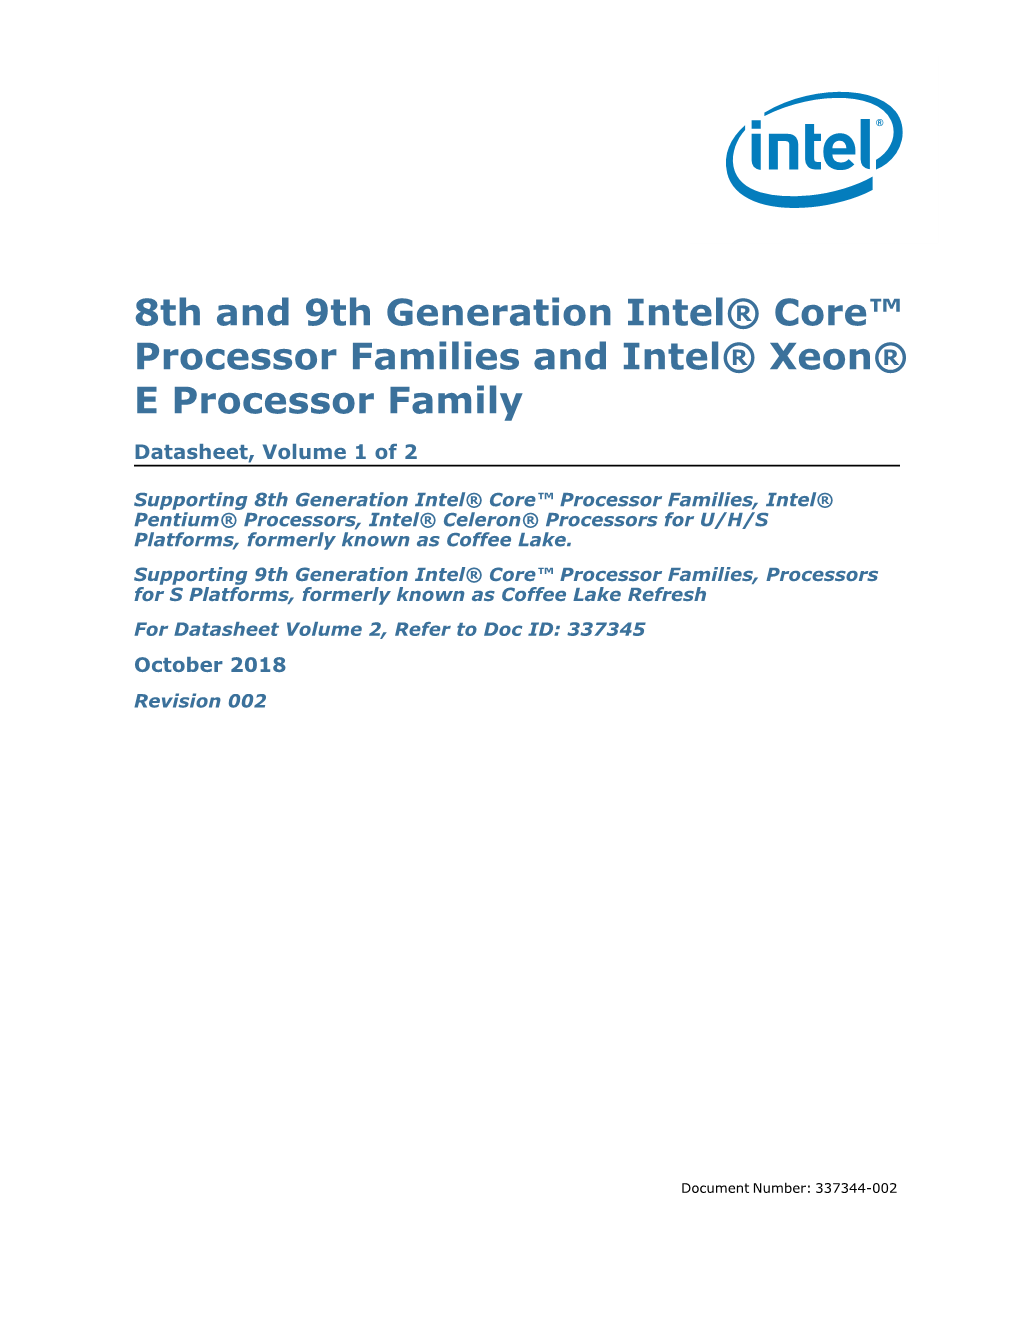 8Th Generation Intel® Core™ Processor Datasheet, Vol. 1